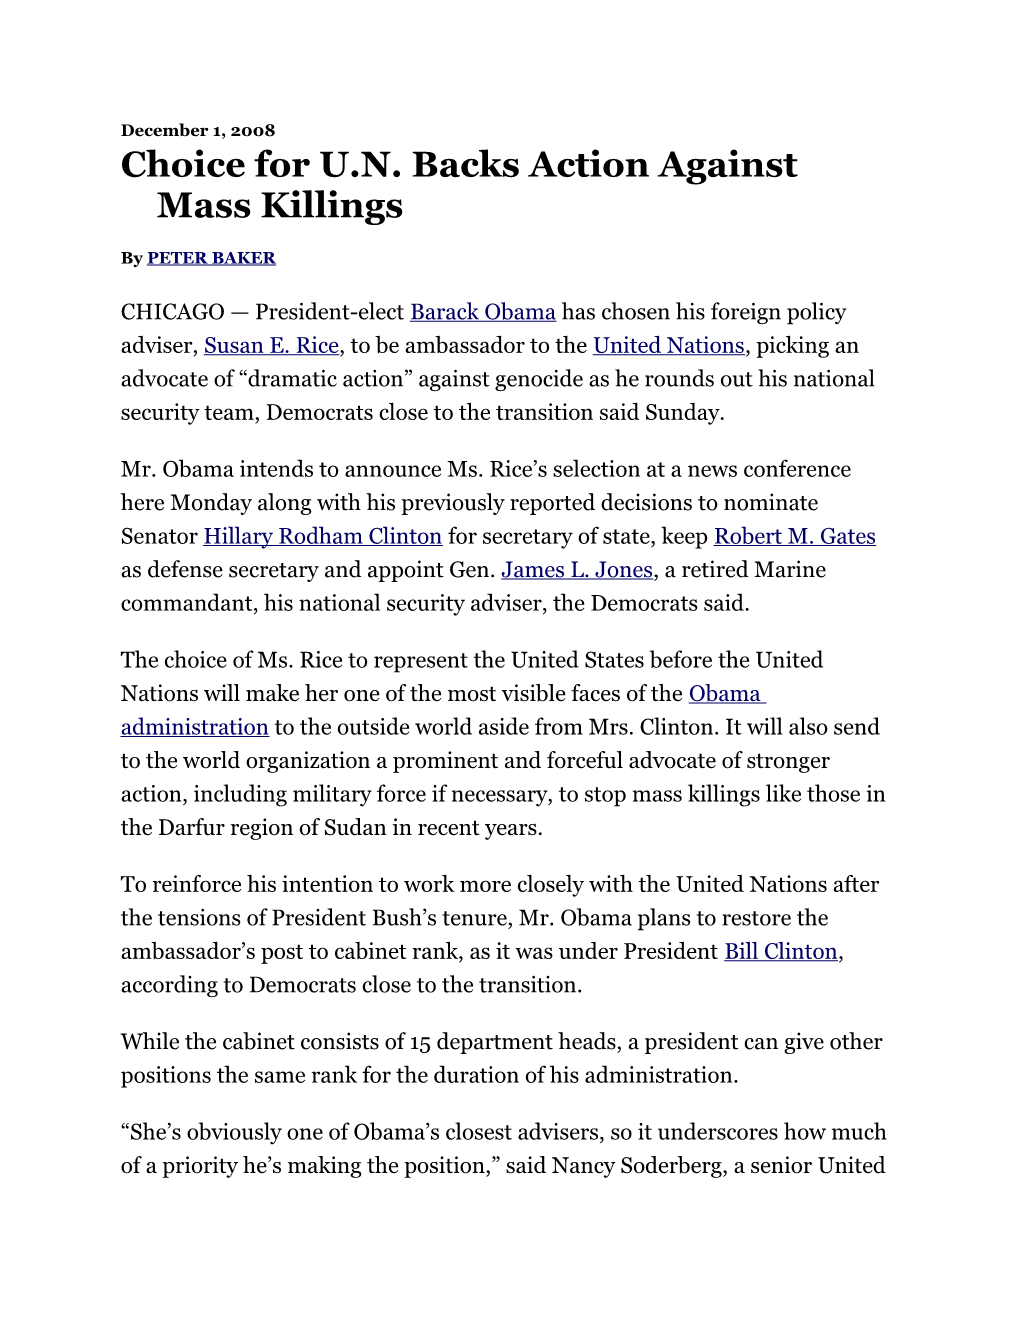 Choice for U.N. Backs Action Against Mass Killings